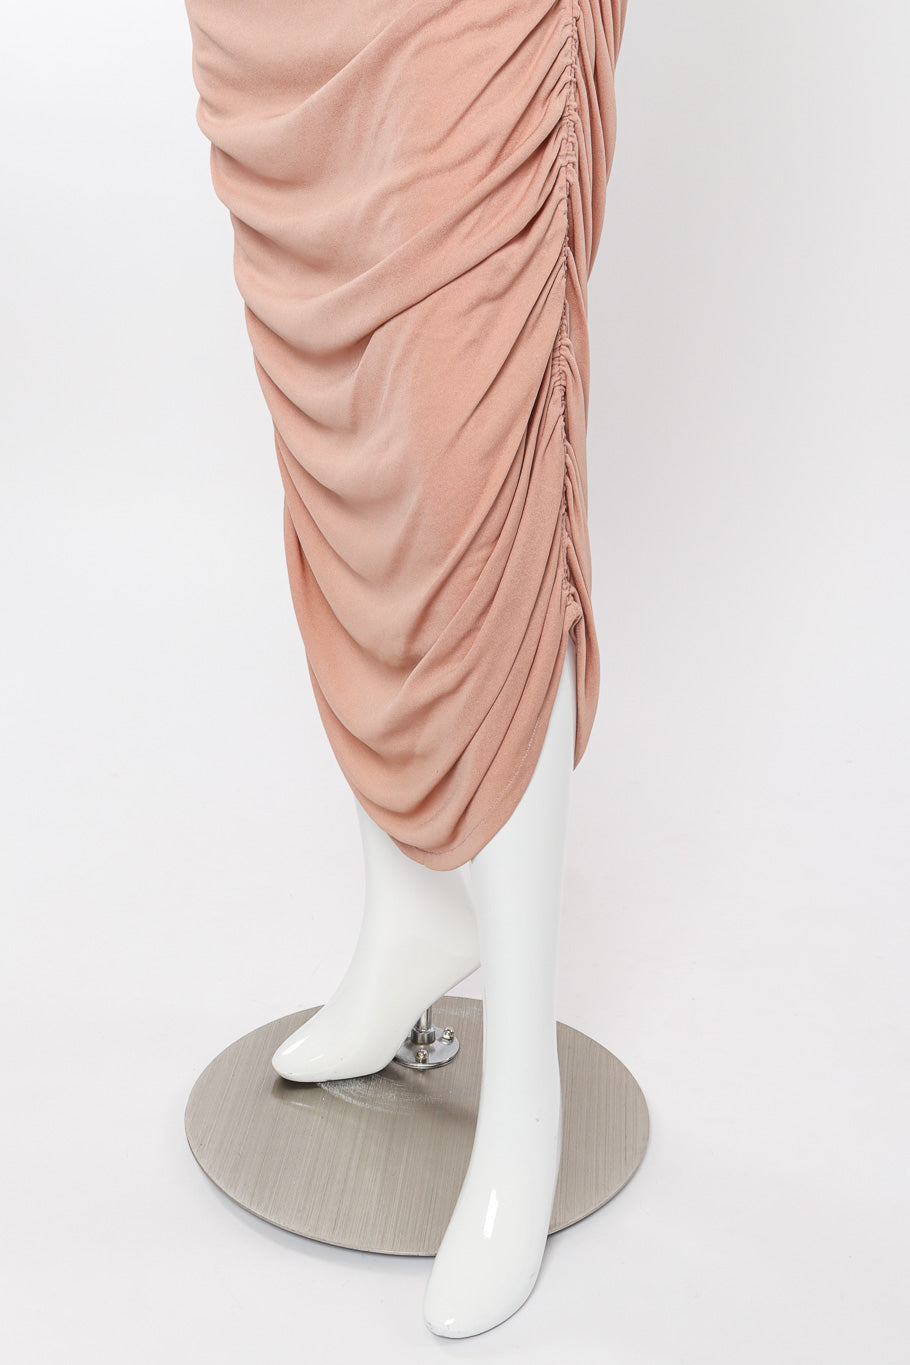 Metal cowl gown by Ferrera on mannequin hem close @recessla